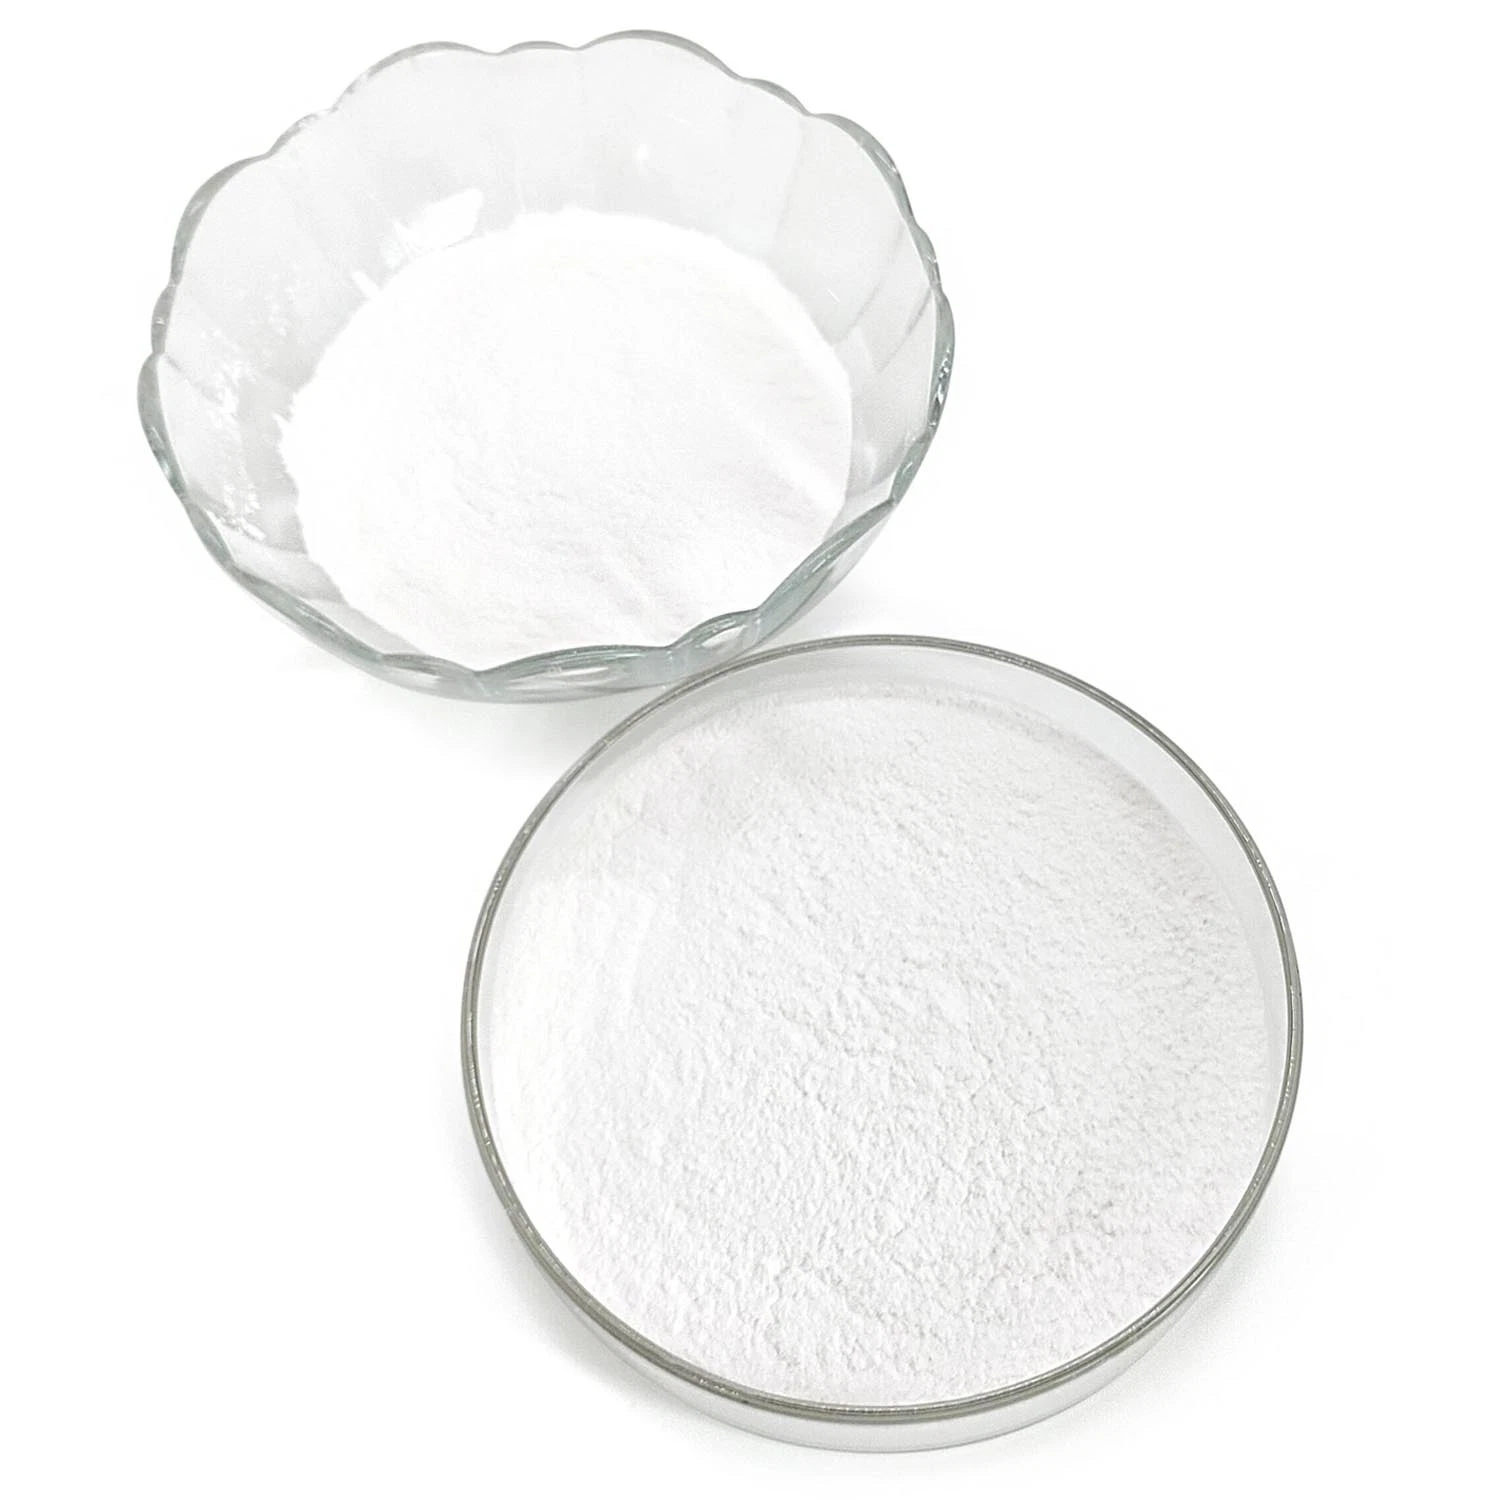 Powder Caa Calcium Acetylacetonat Ca Acetyl Acetonate